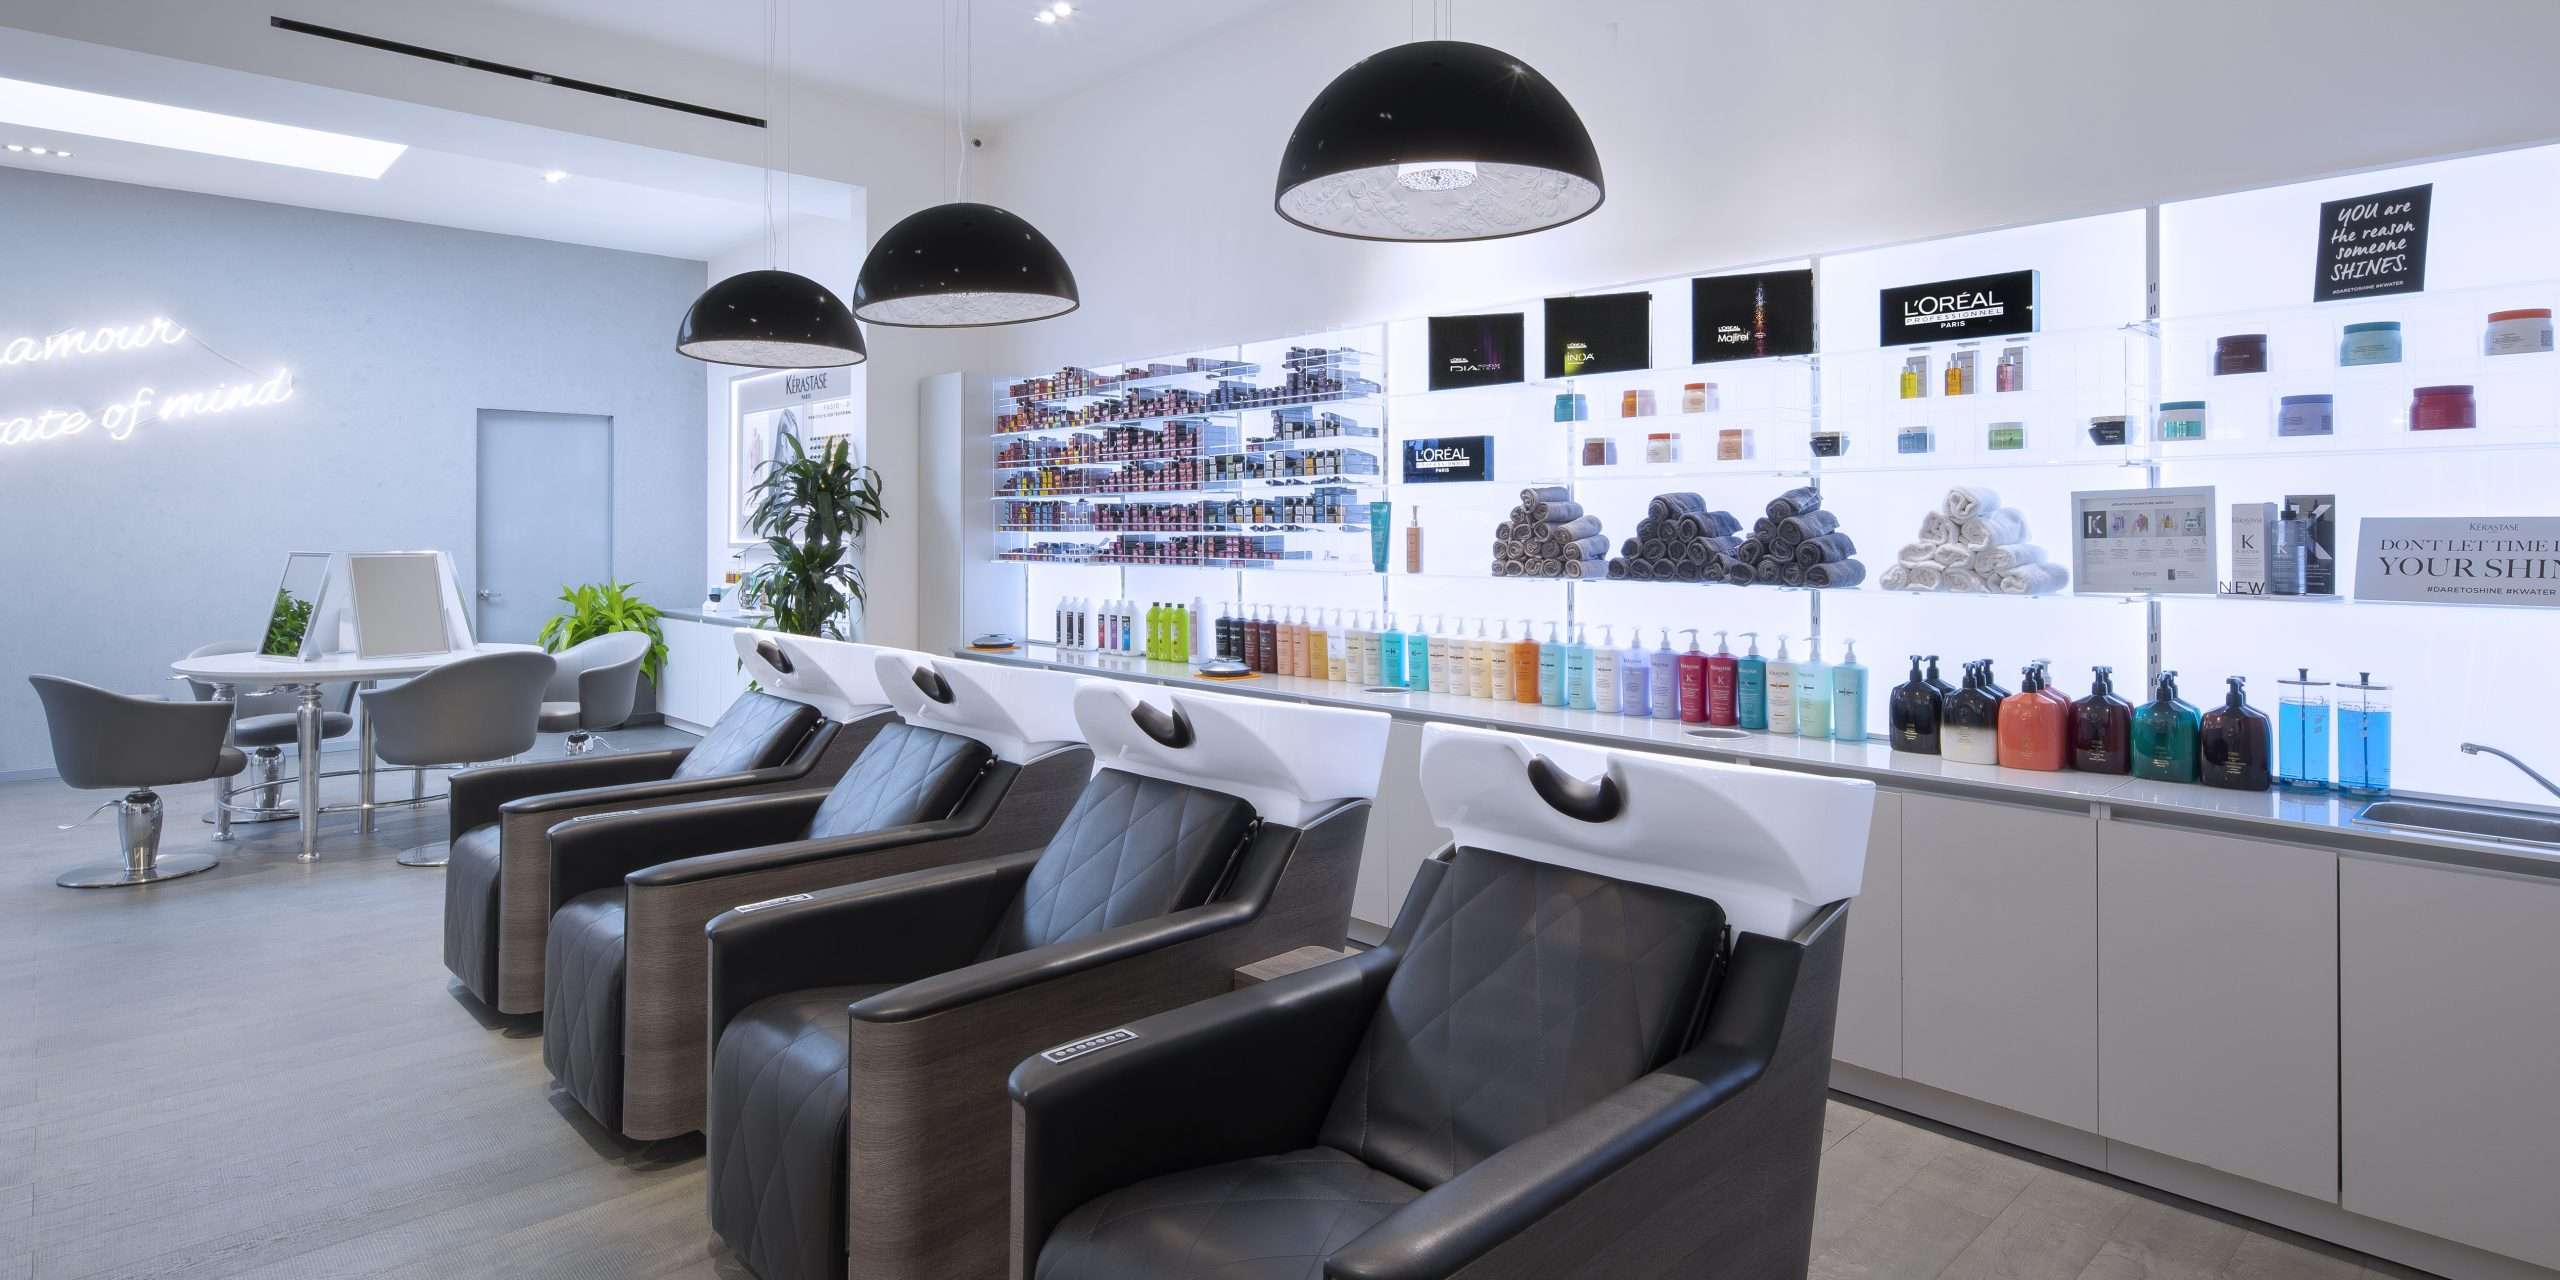 fabio scalia brooklyn heights hair salon